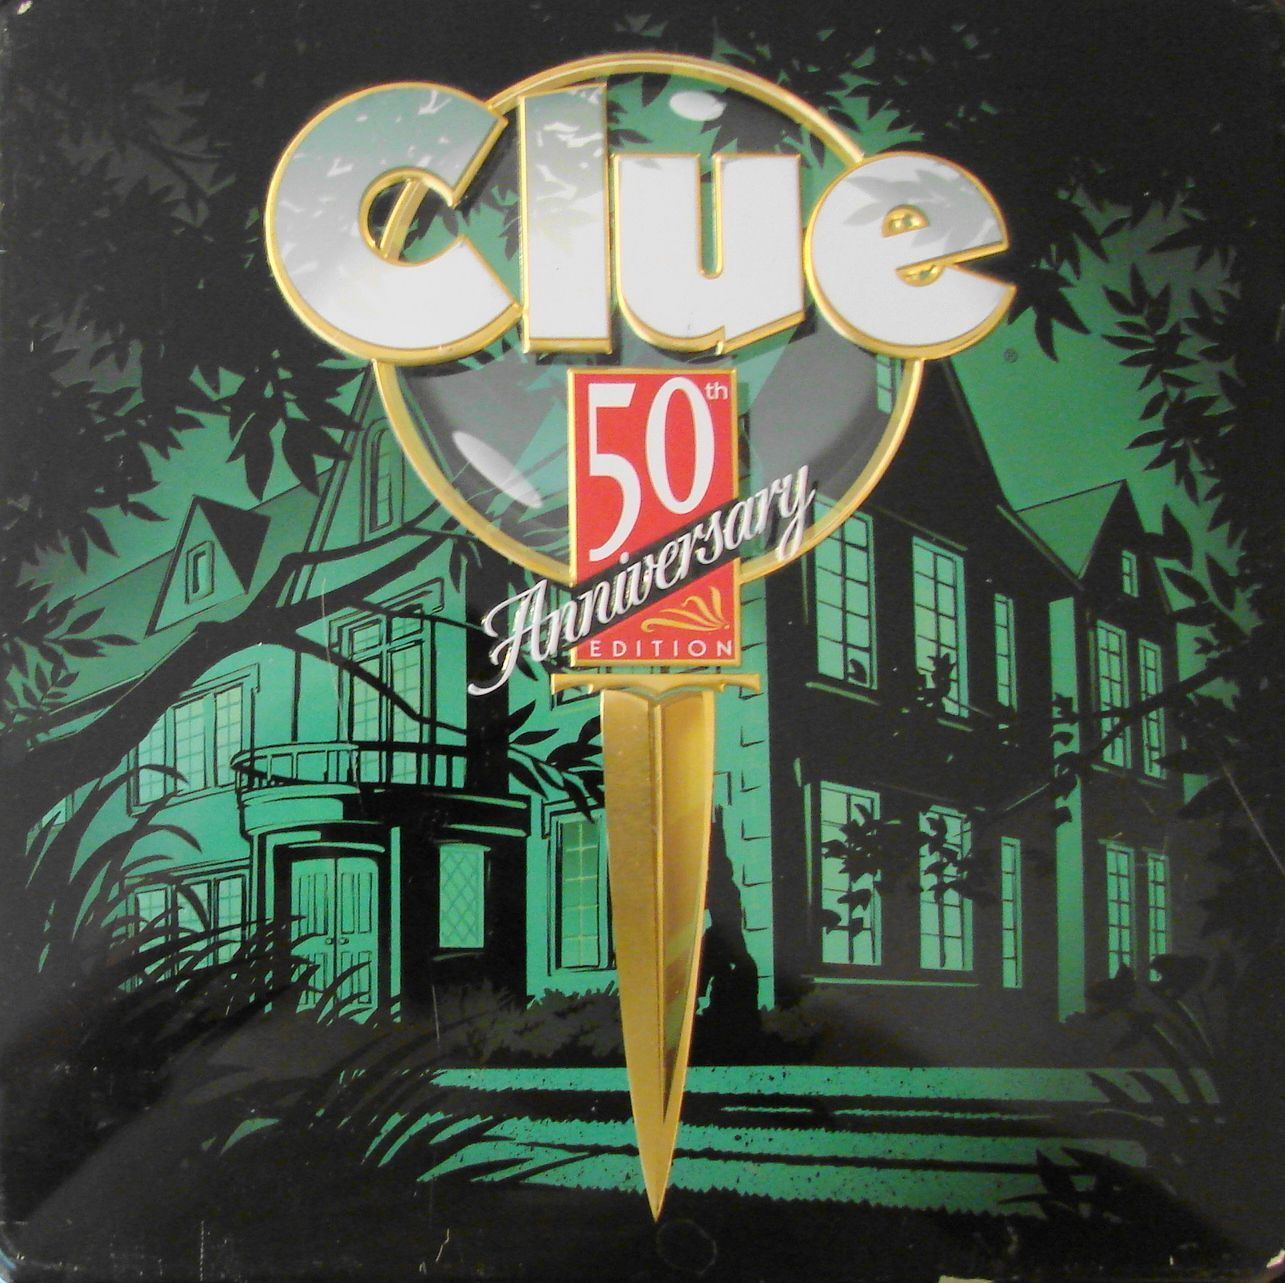 Clue: 50th Anniversary Edition